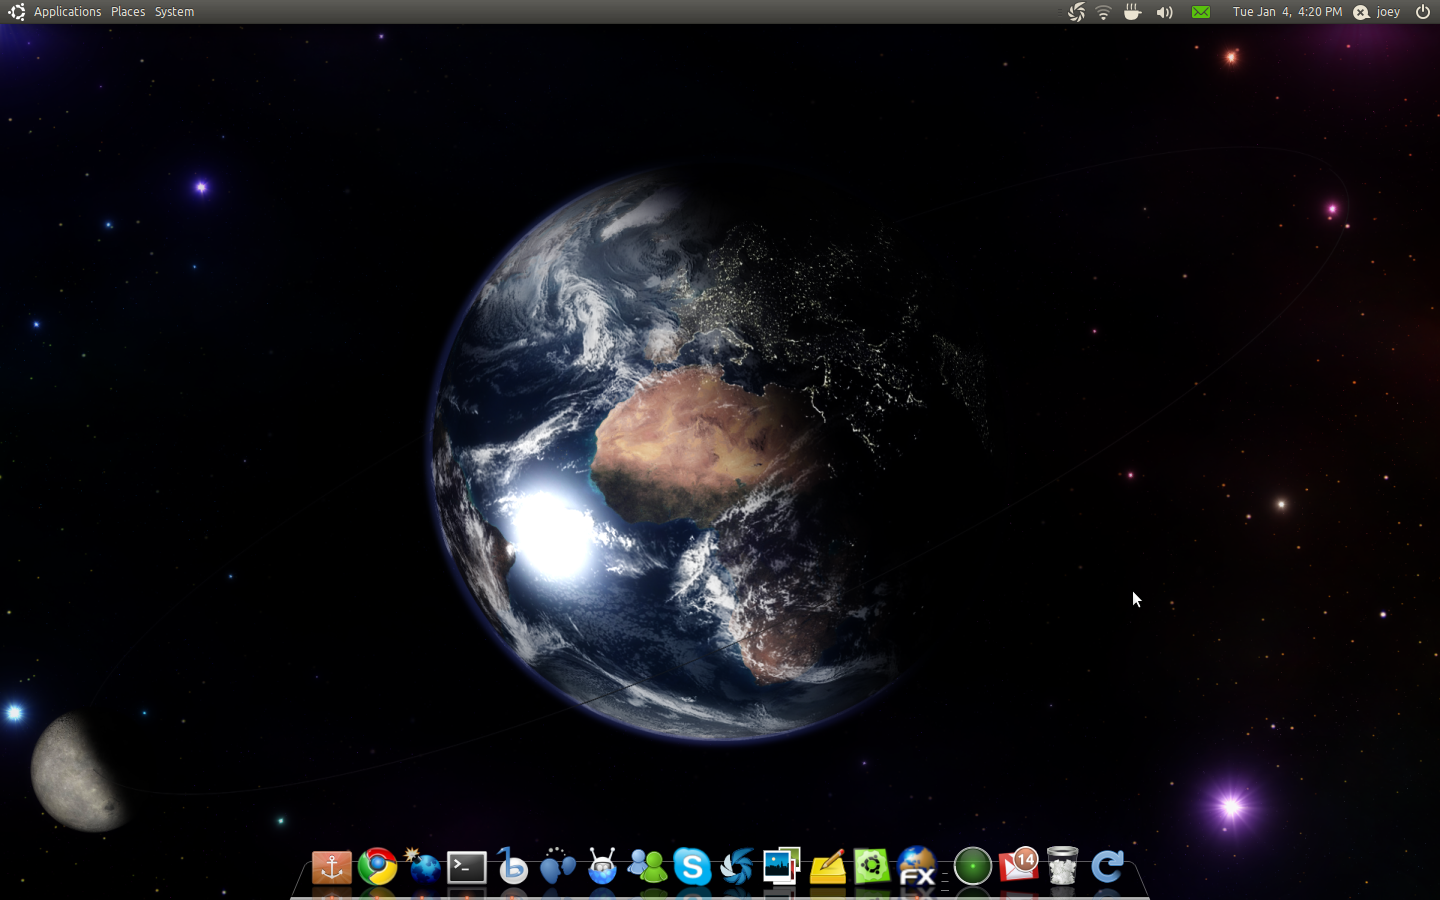 Ubuntu Tips And Tricks HQ real time Earth wallpaper for Ubuntu